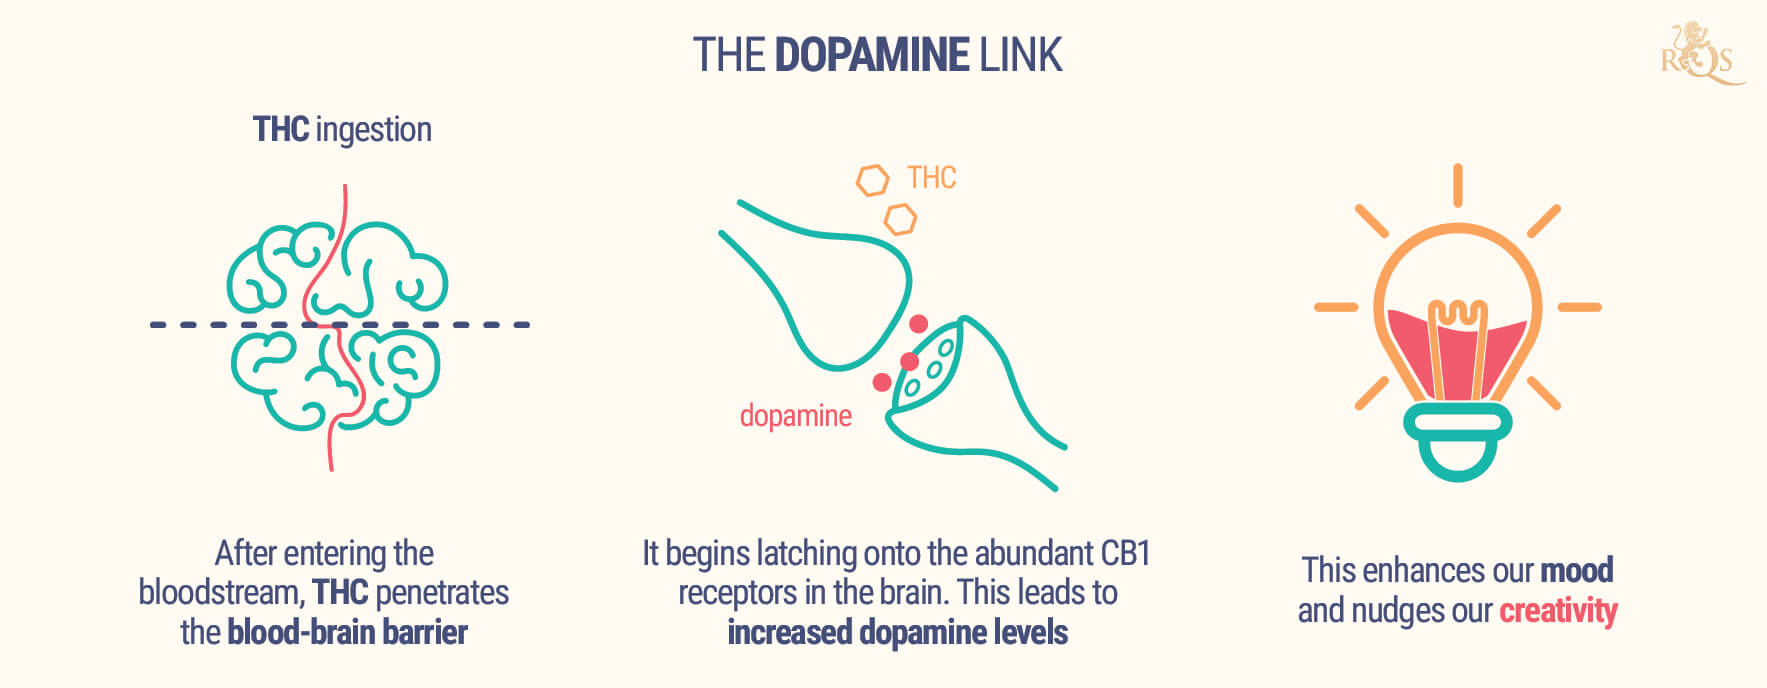 The Dopamine Link